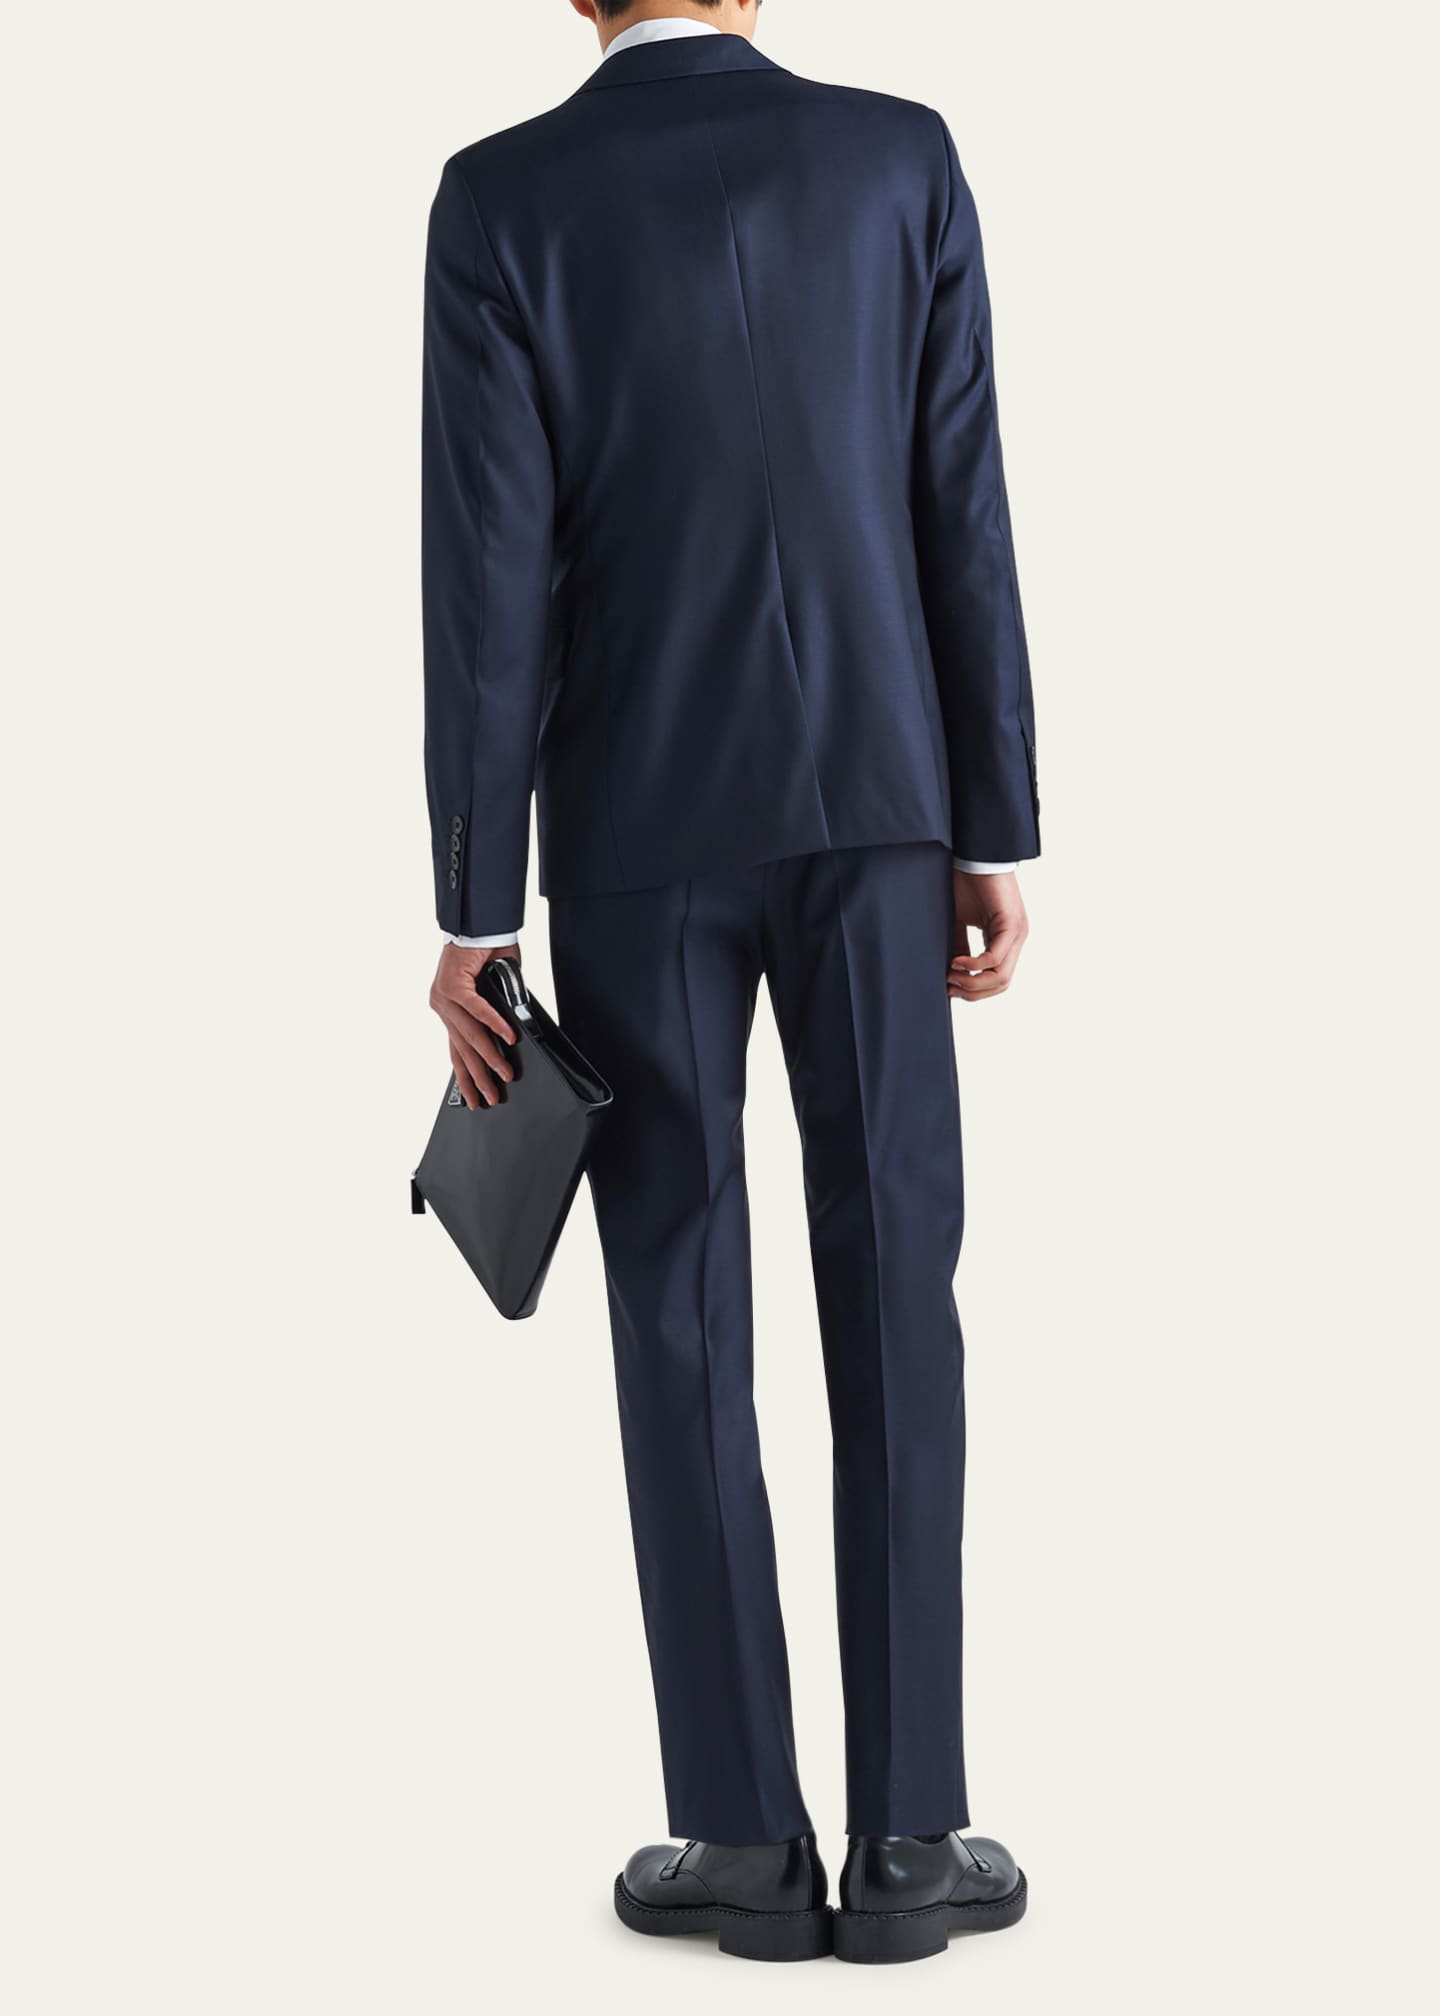 contact Mineraalwater bleek Prada Men's Solid Wool-Blend Suit - Bergdorf Goodman